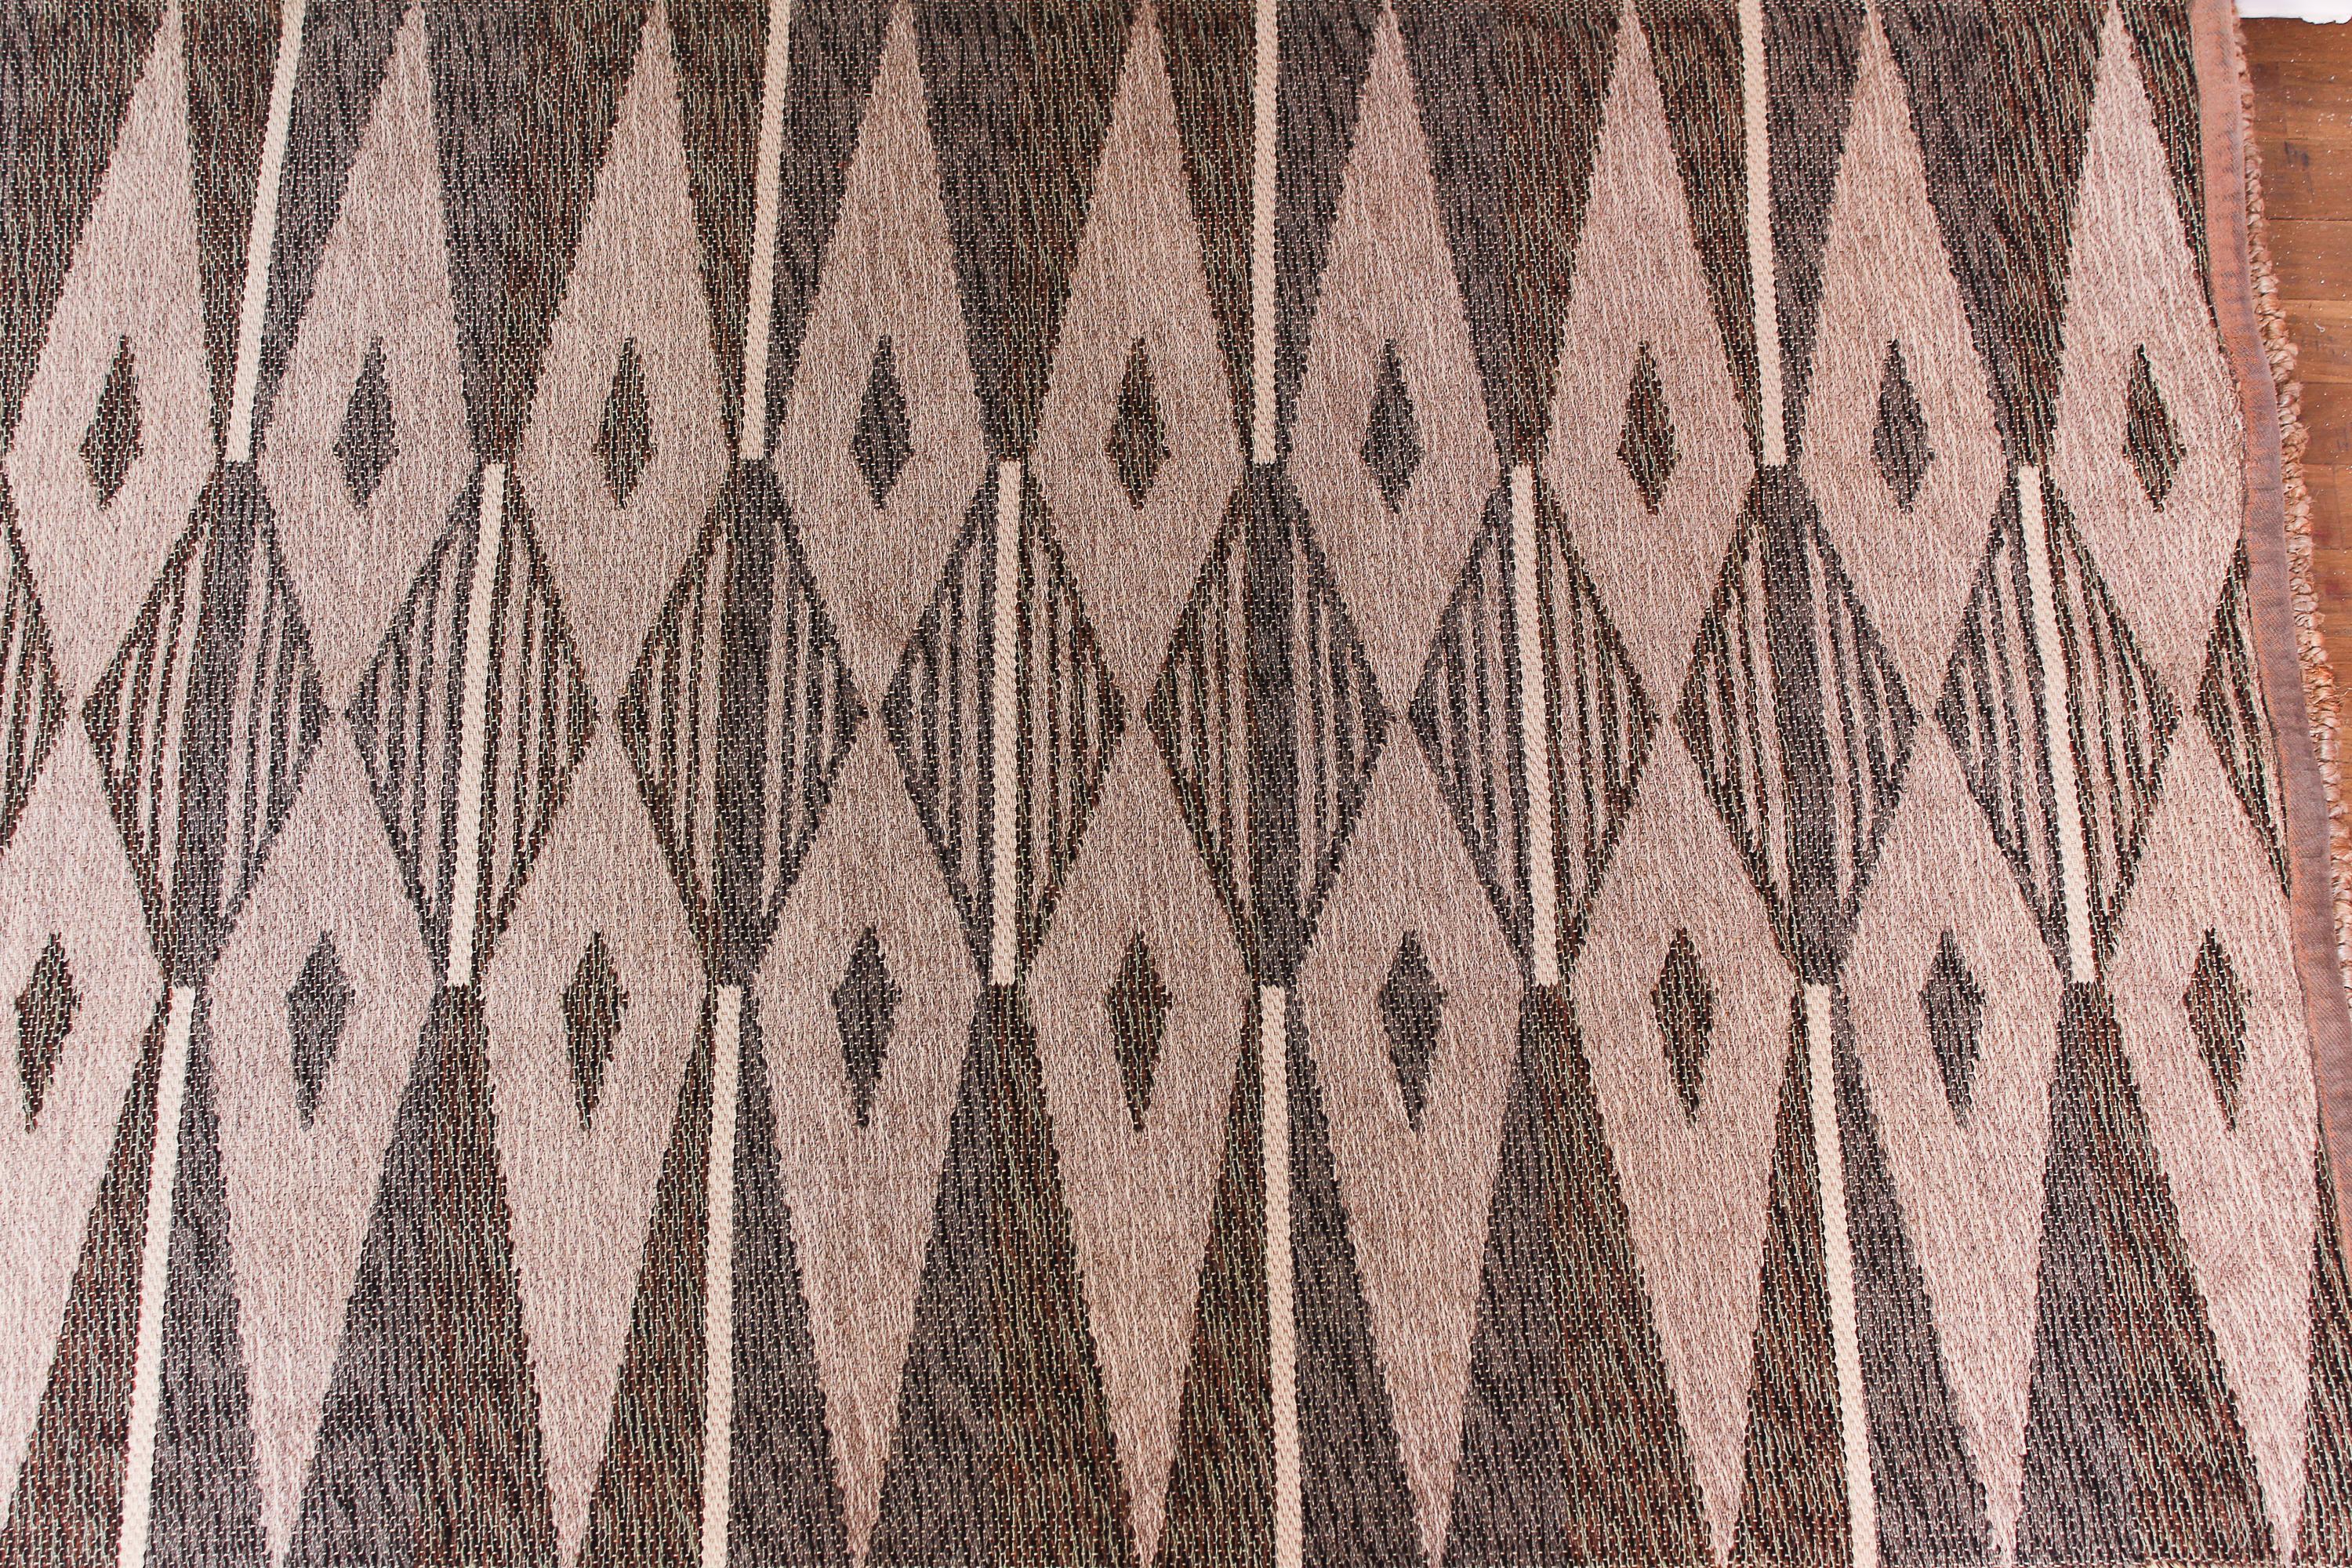 Mid-20th Century Midcentury Scandinavian Flat-Weave Gallery Carpet, 1950s For Sale